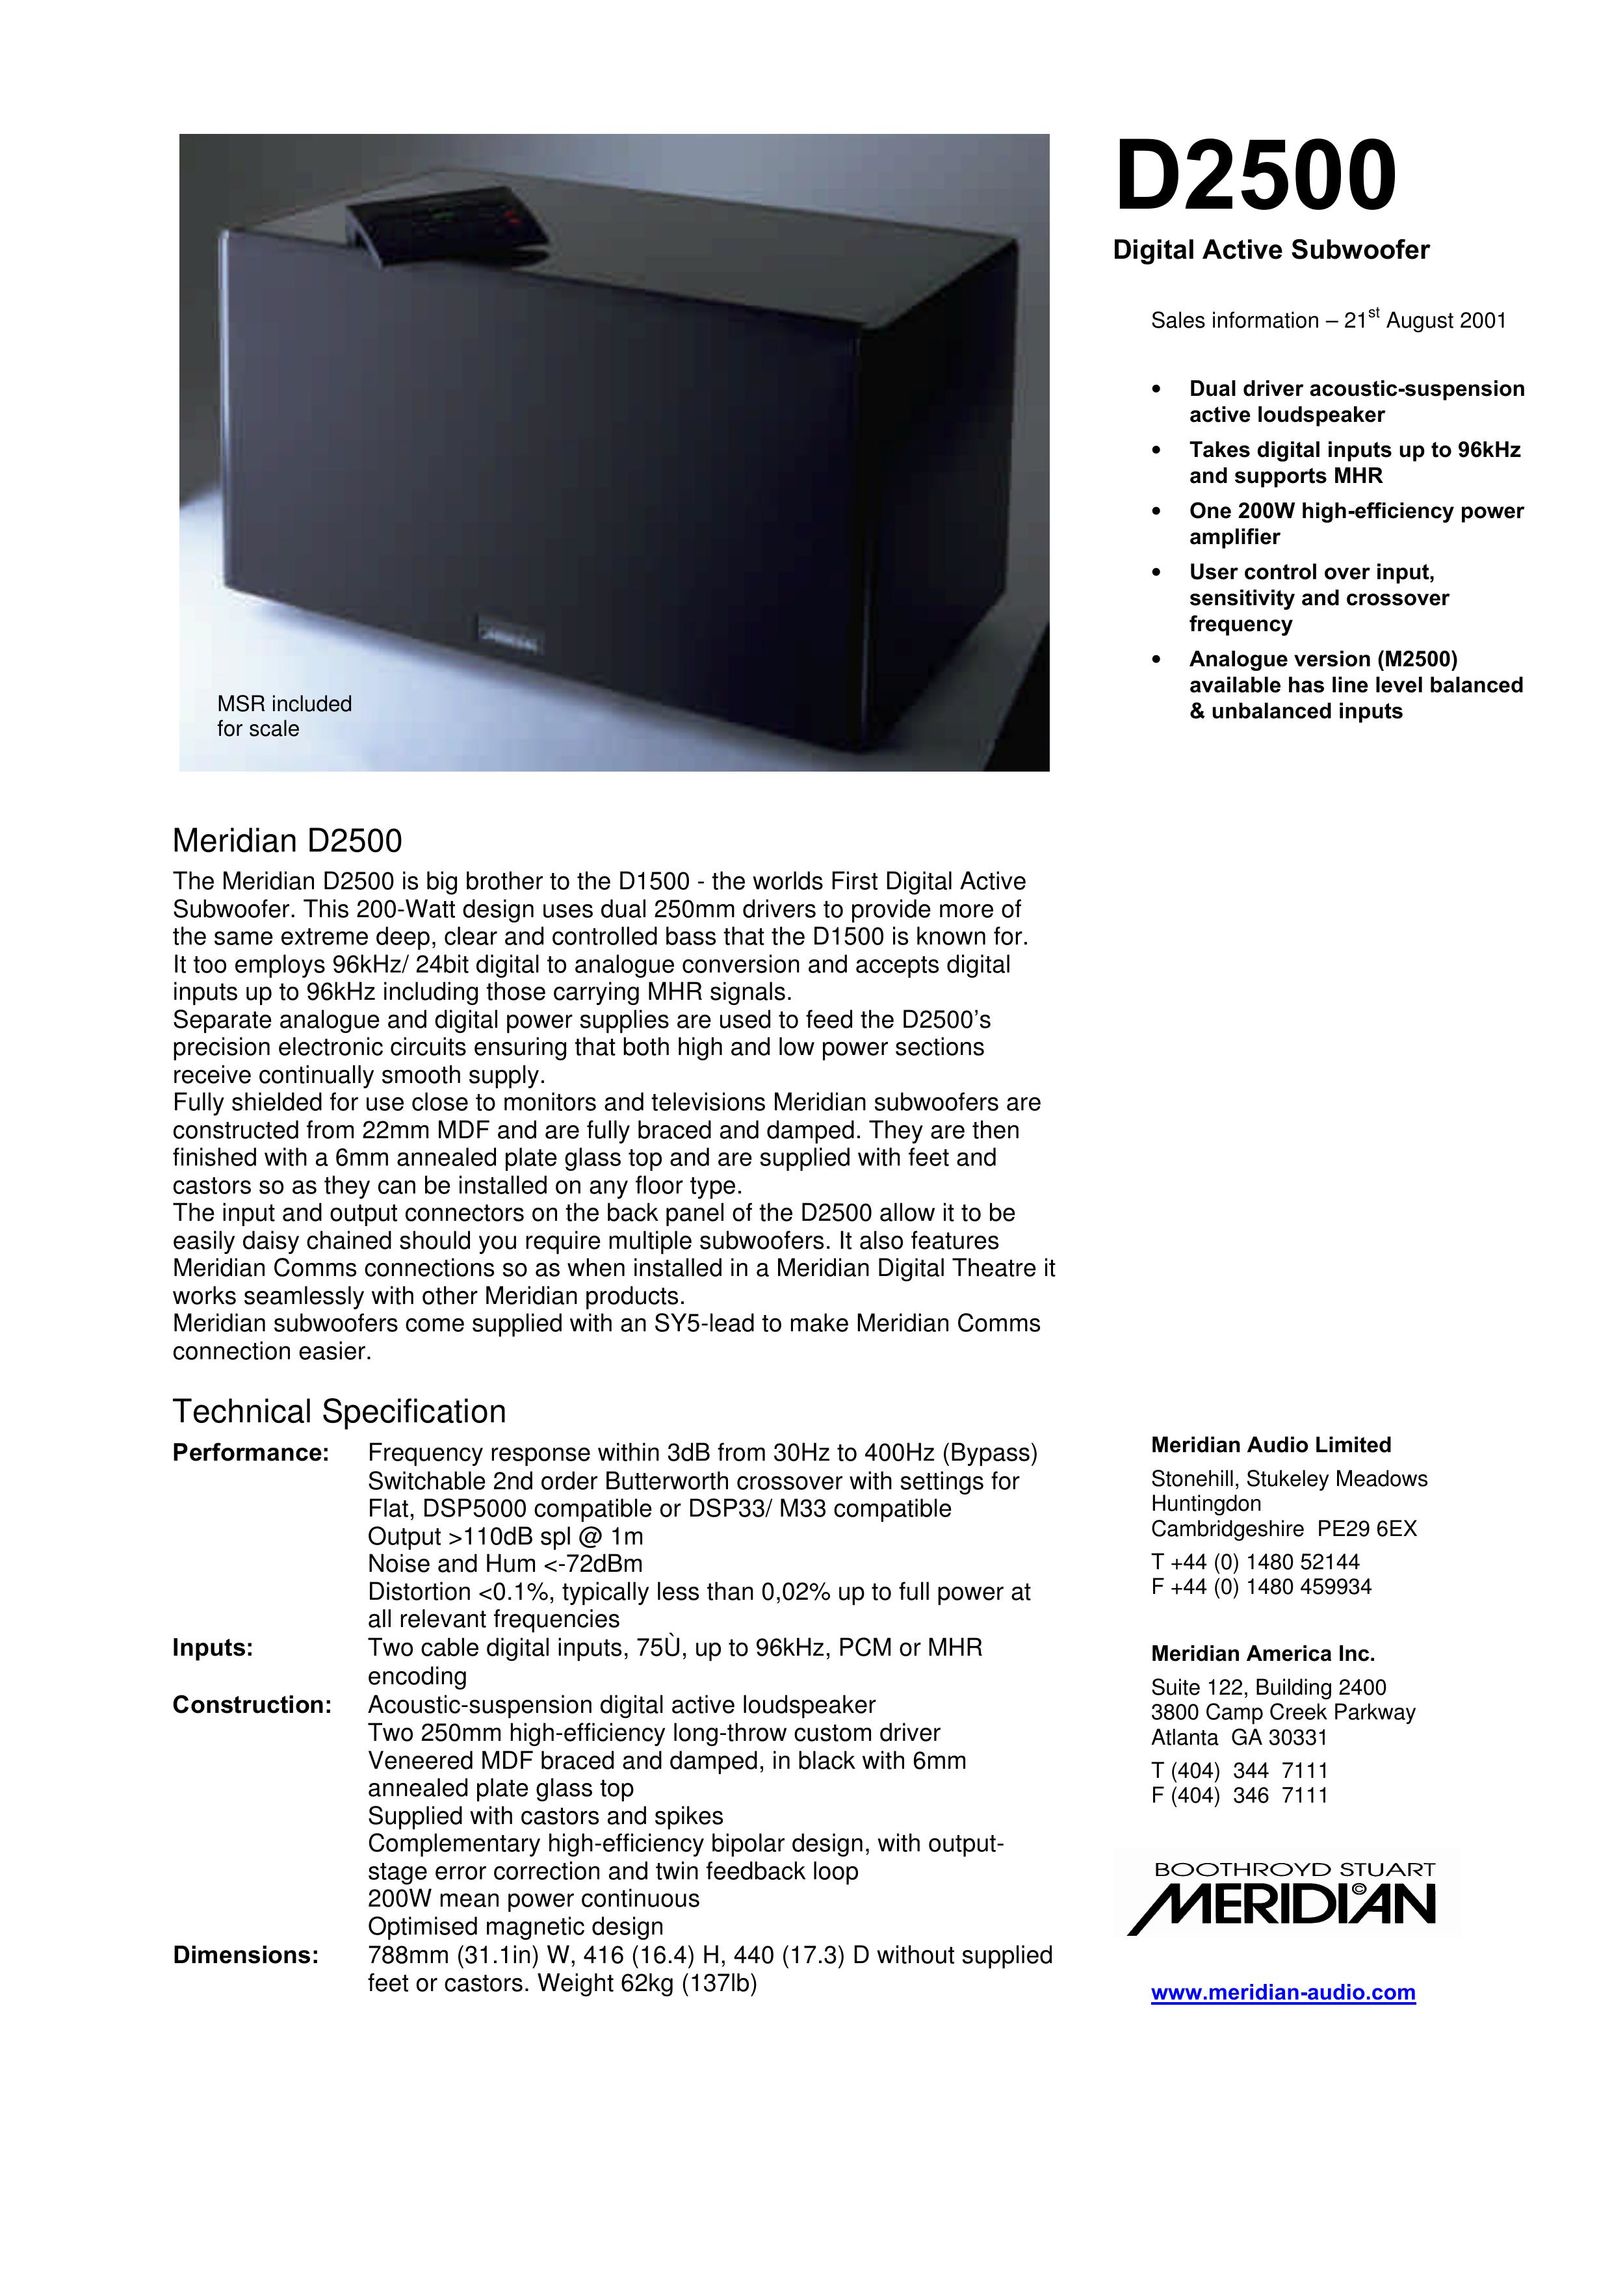 Meridian America D2500 Speaker User Manual